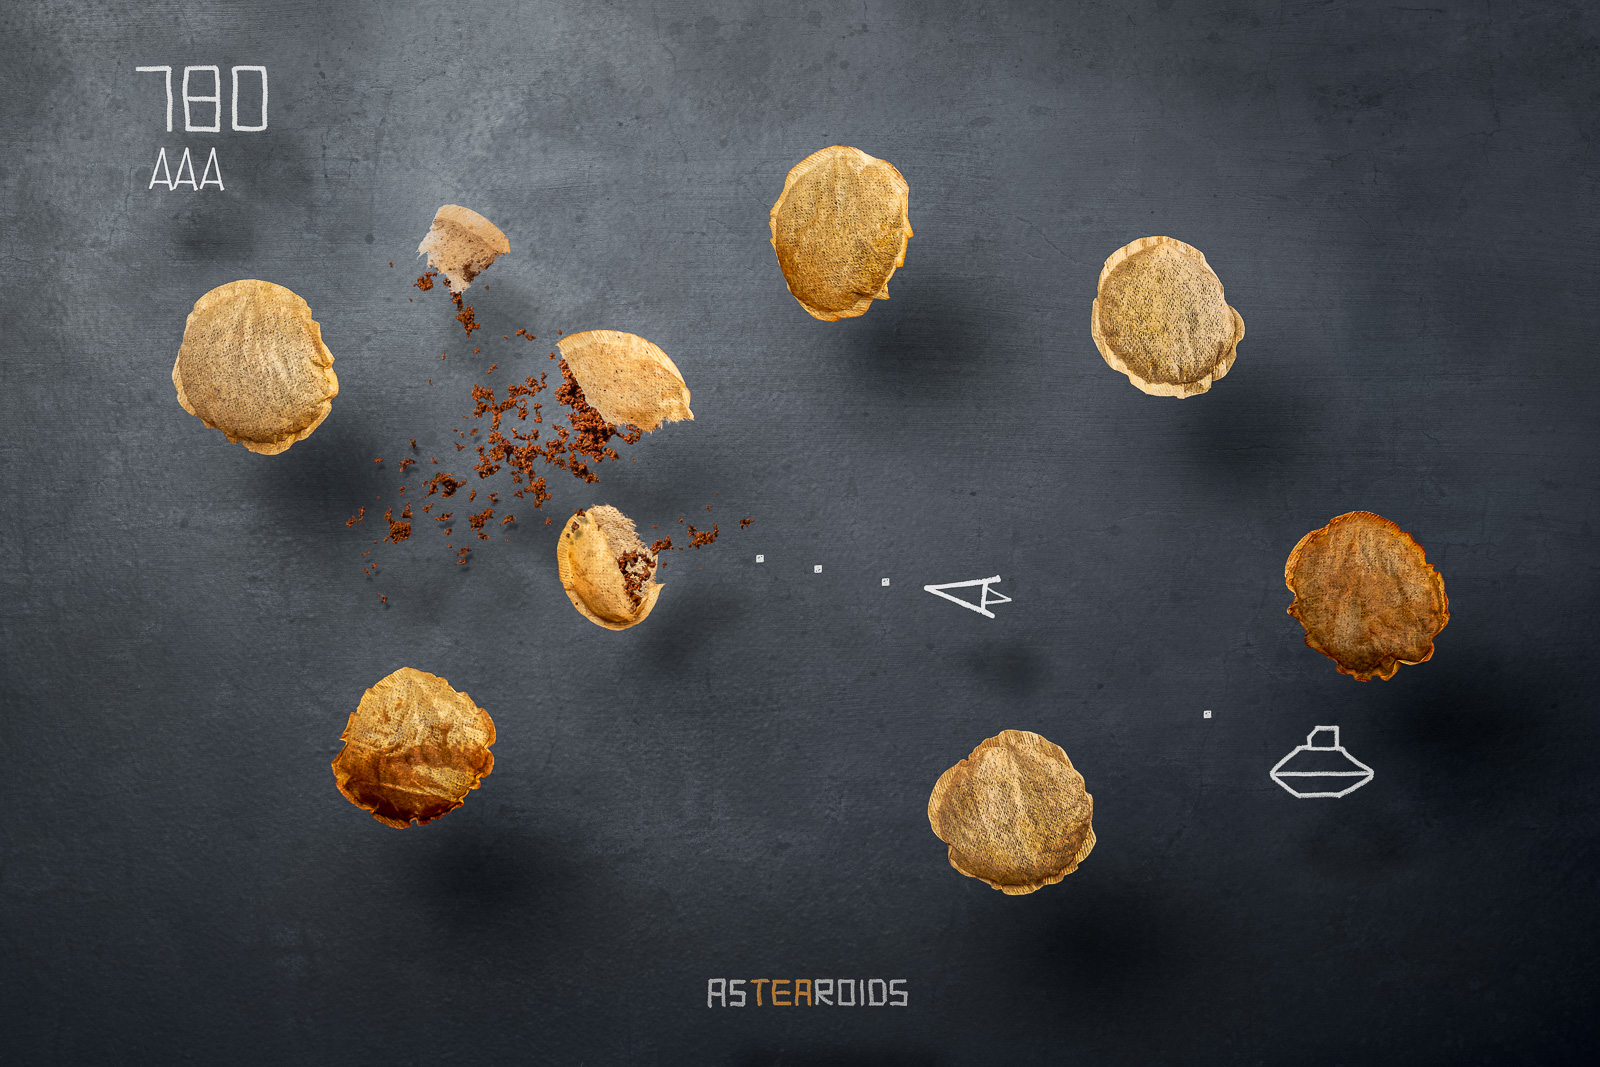 Asteroids or As-tea-roids